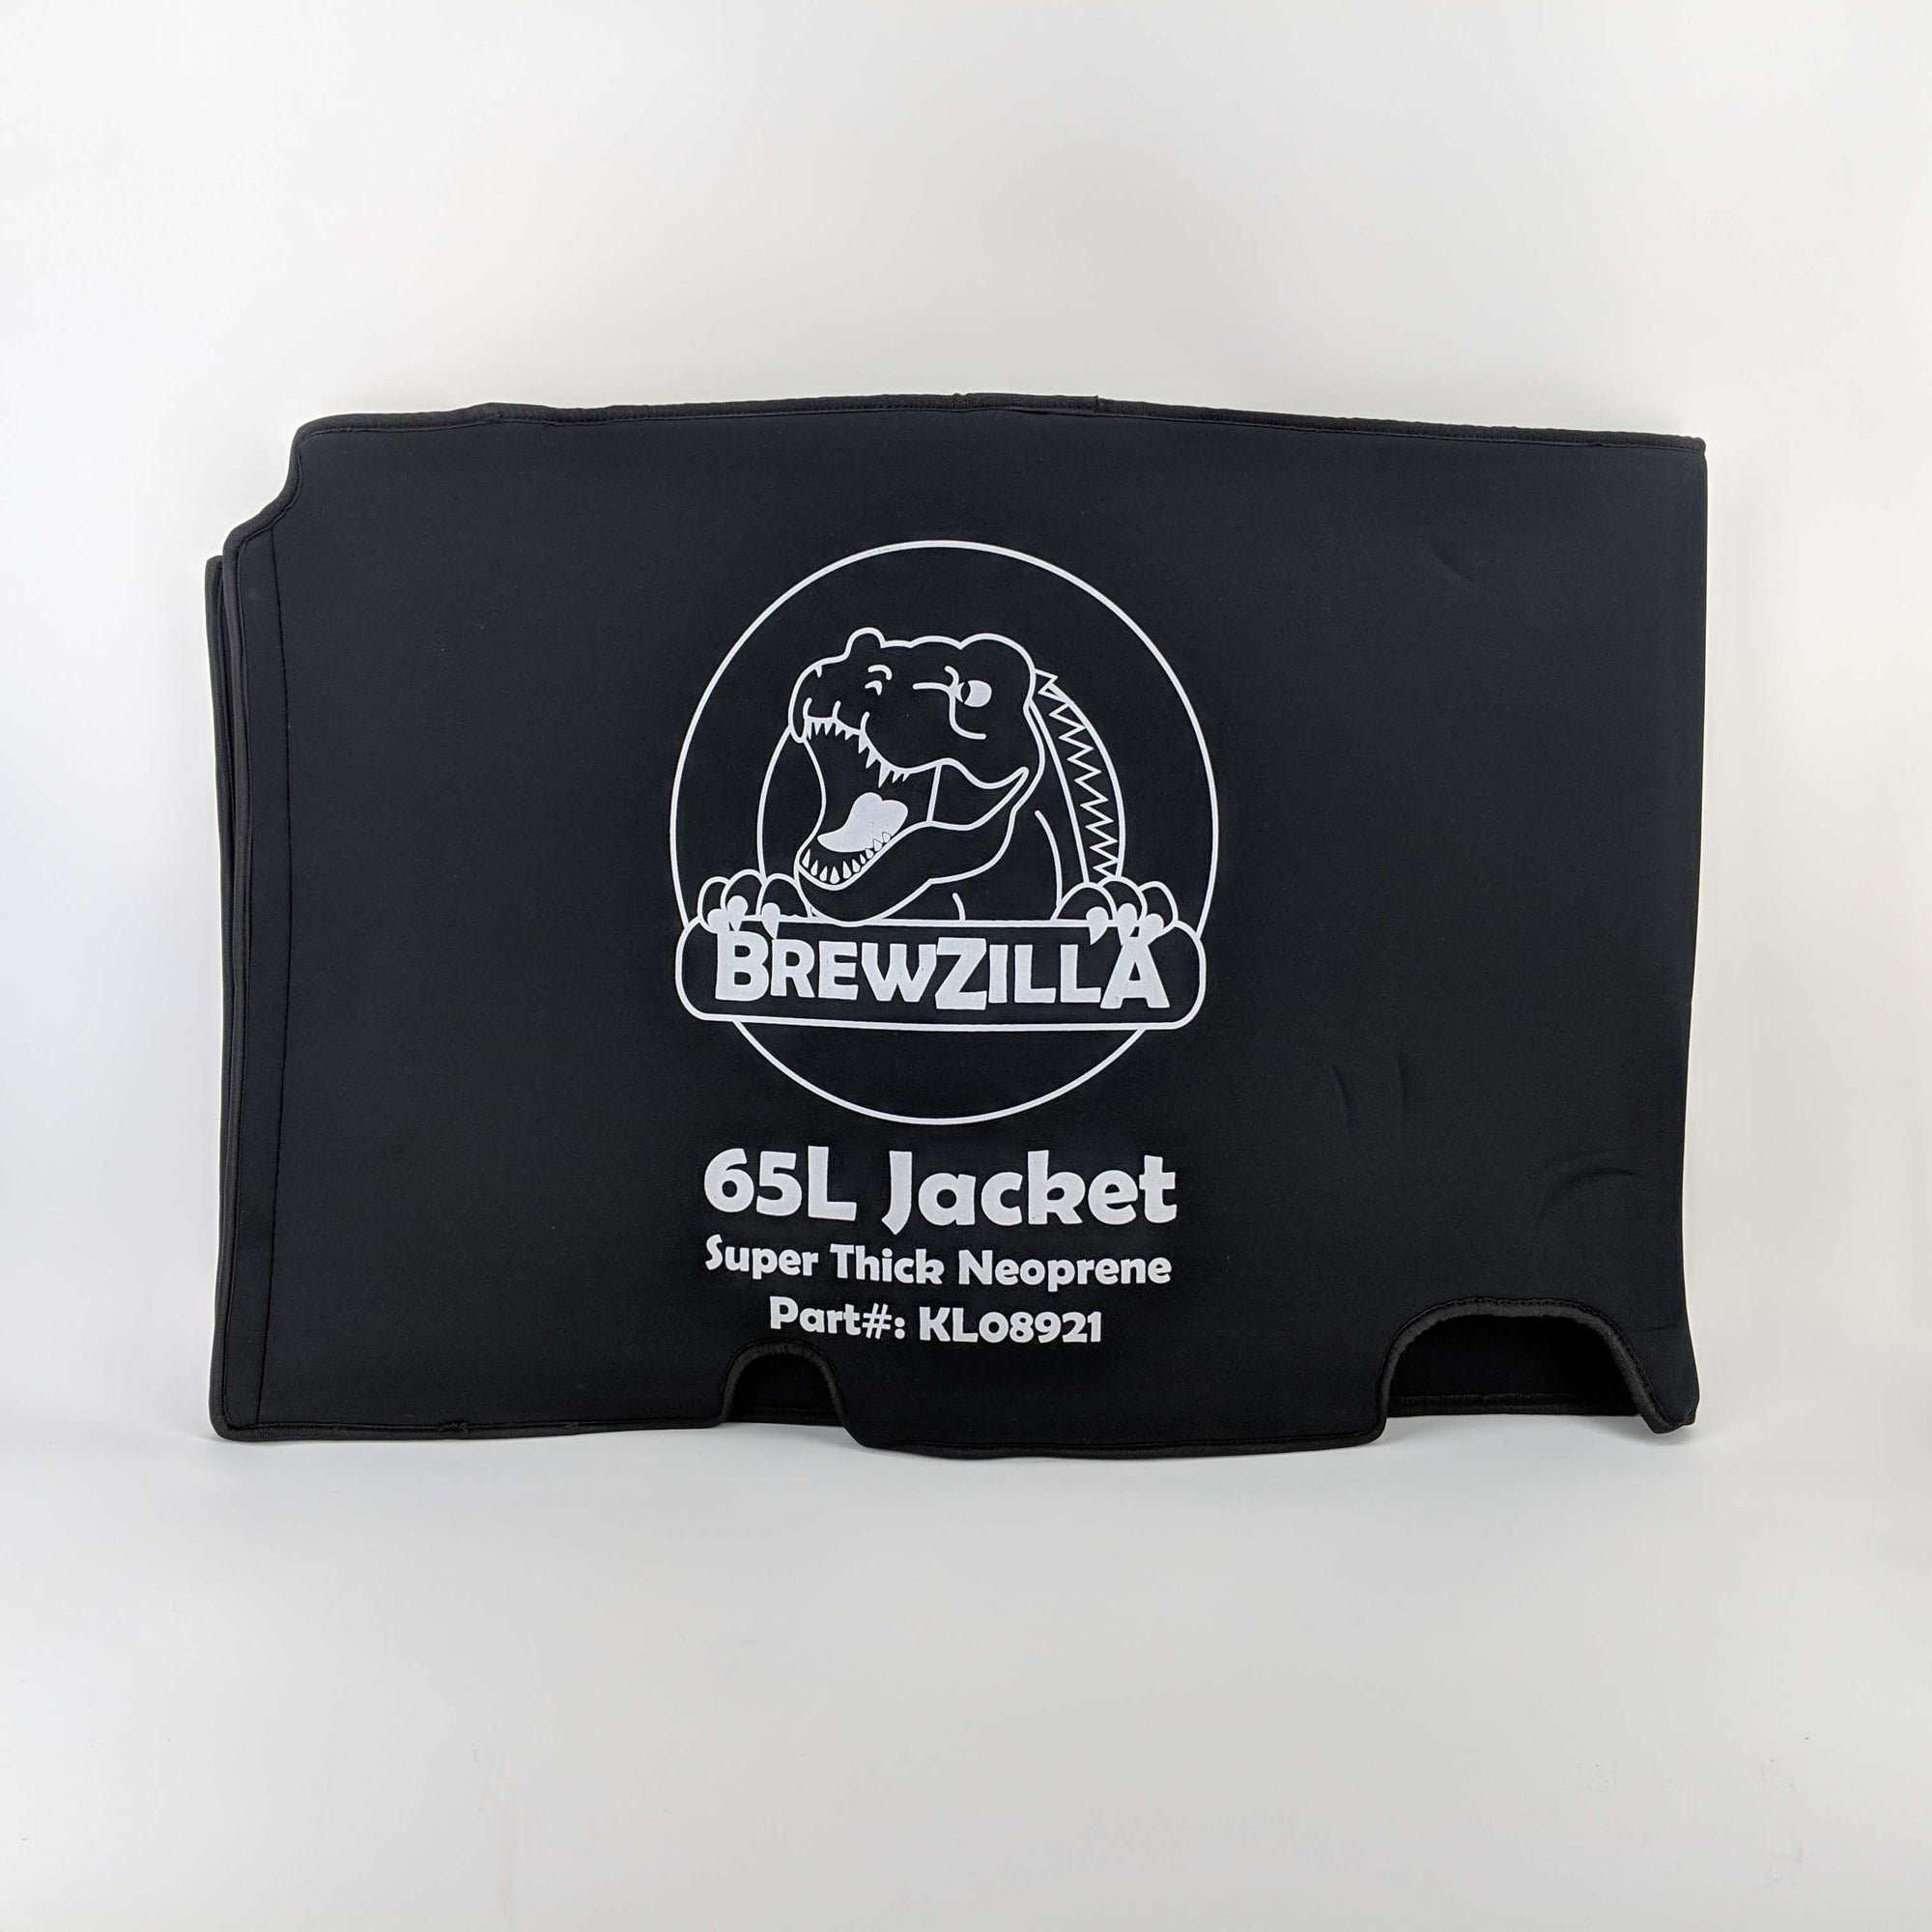 Brewzilla / Robobrew Jacket - 65L - All Things Fermented | Home Brew Shop NZ | Supplies | Equipment